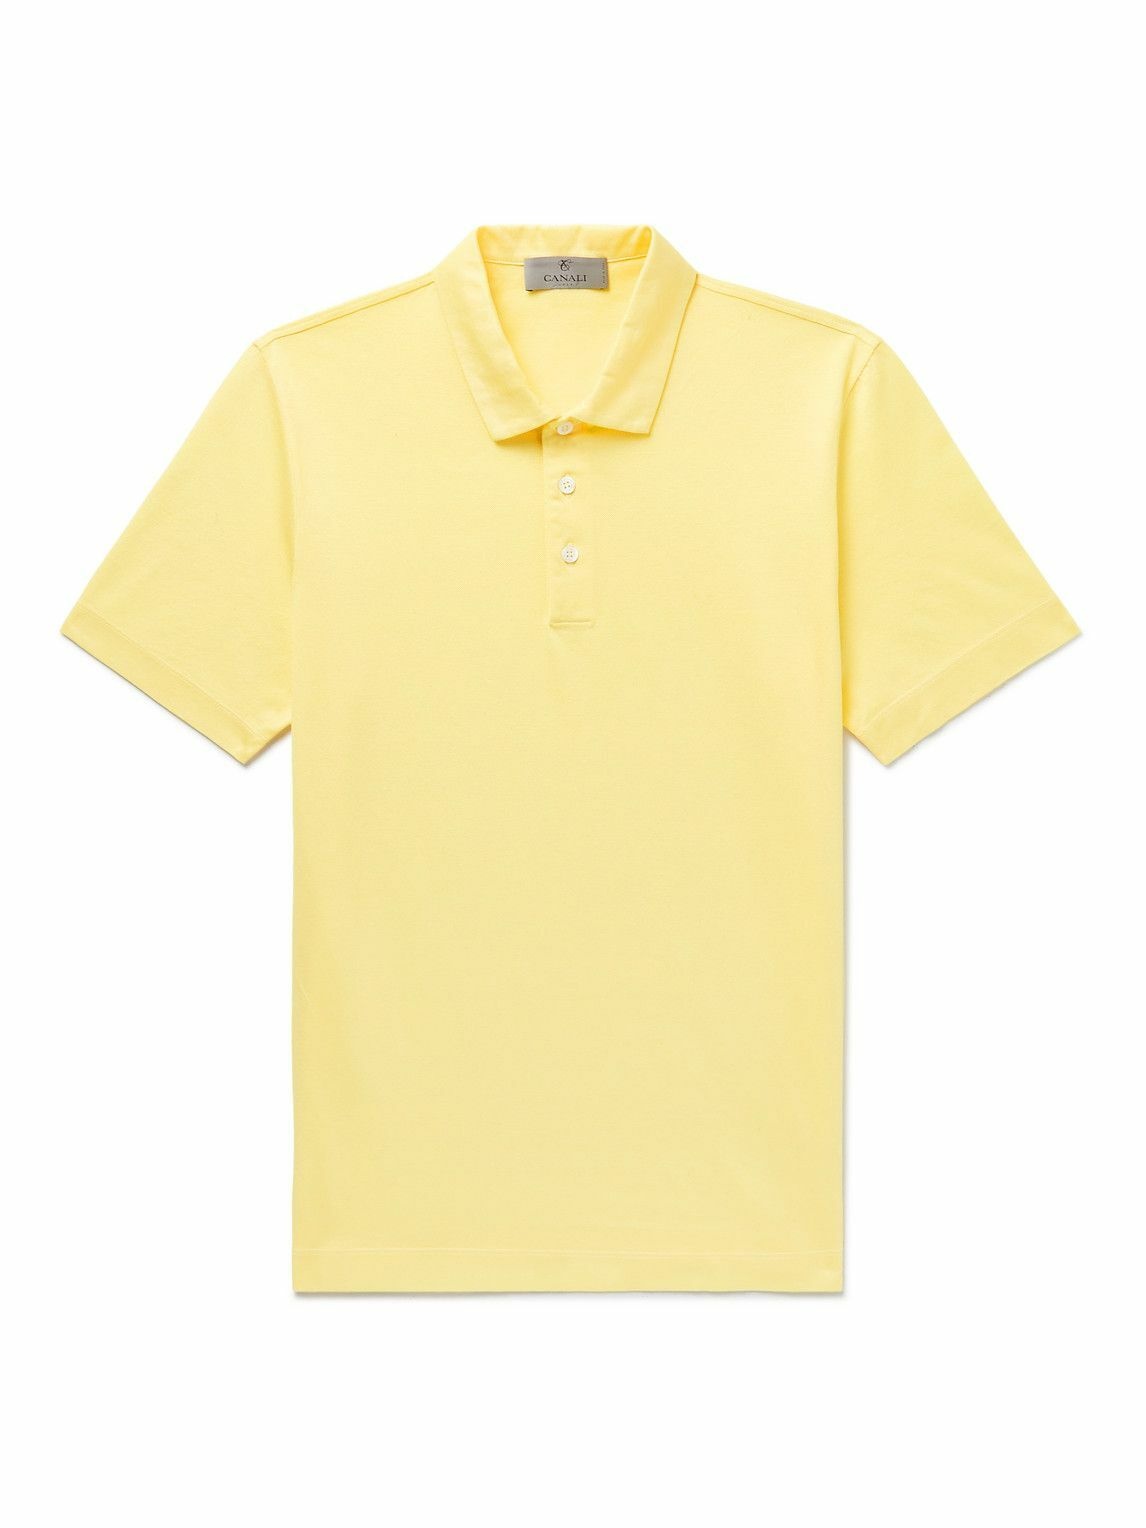 Canali - Slim-Fit Cotton-Piqué Polo Shirt - Yellow Canali